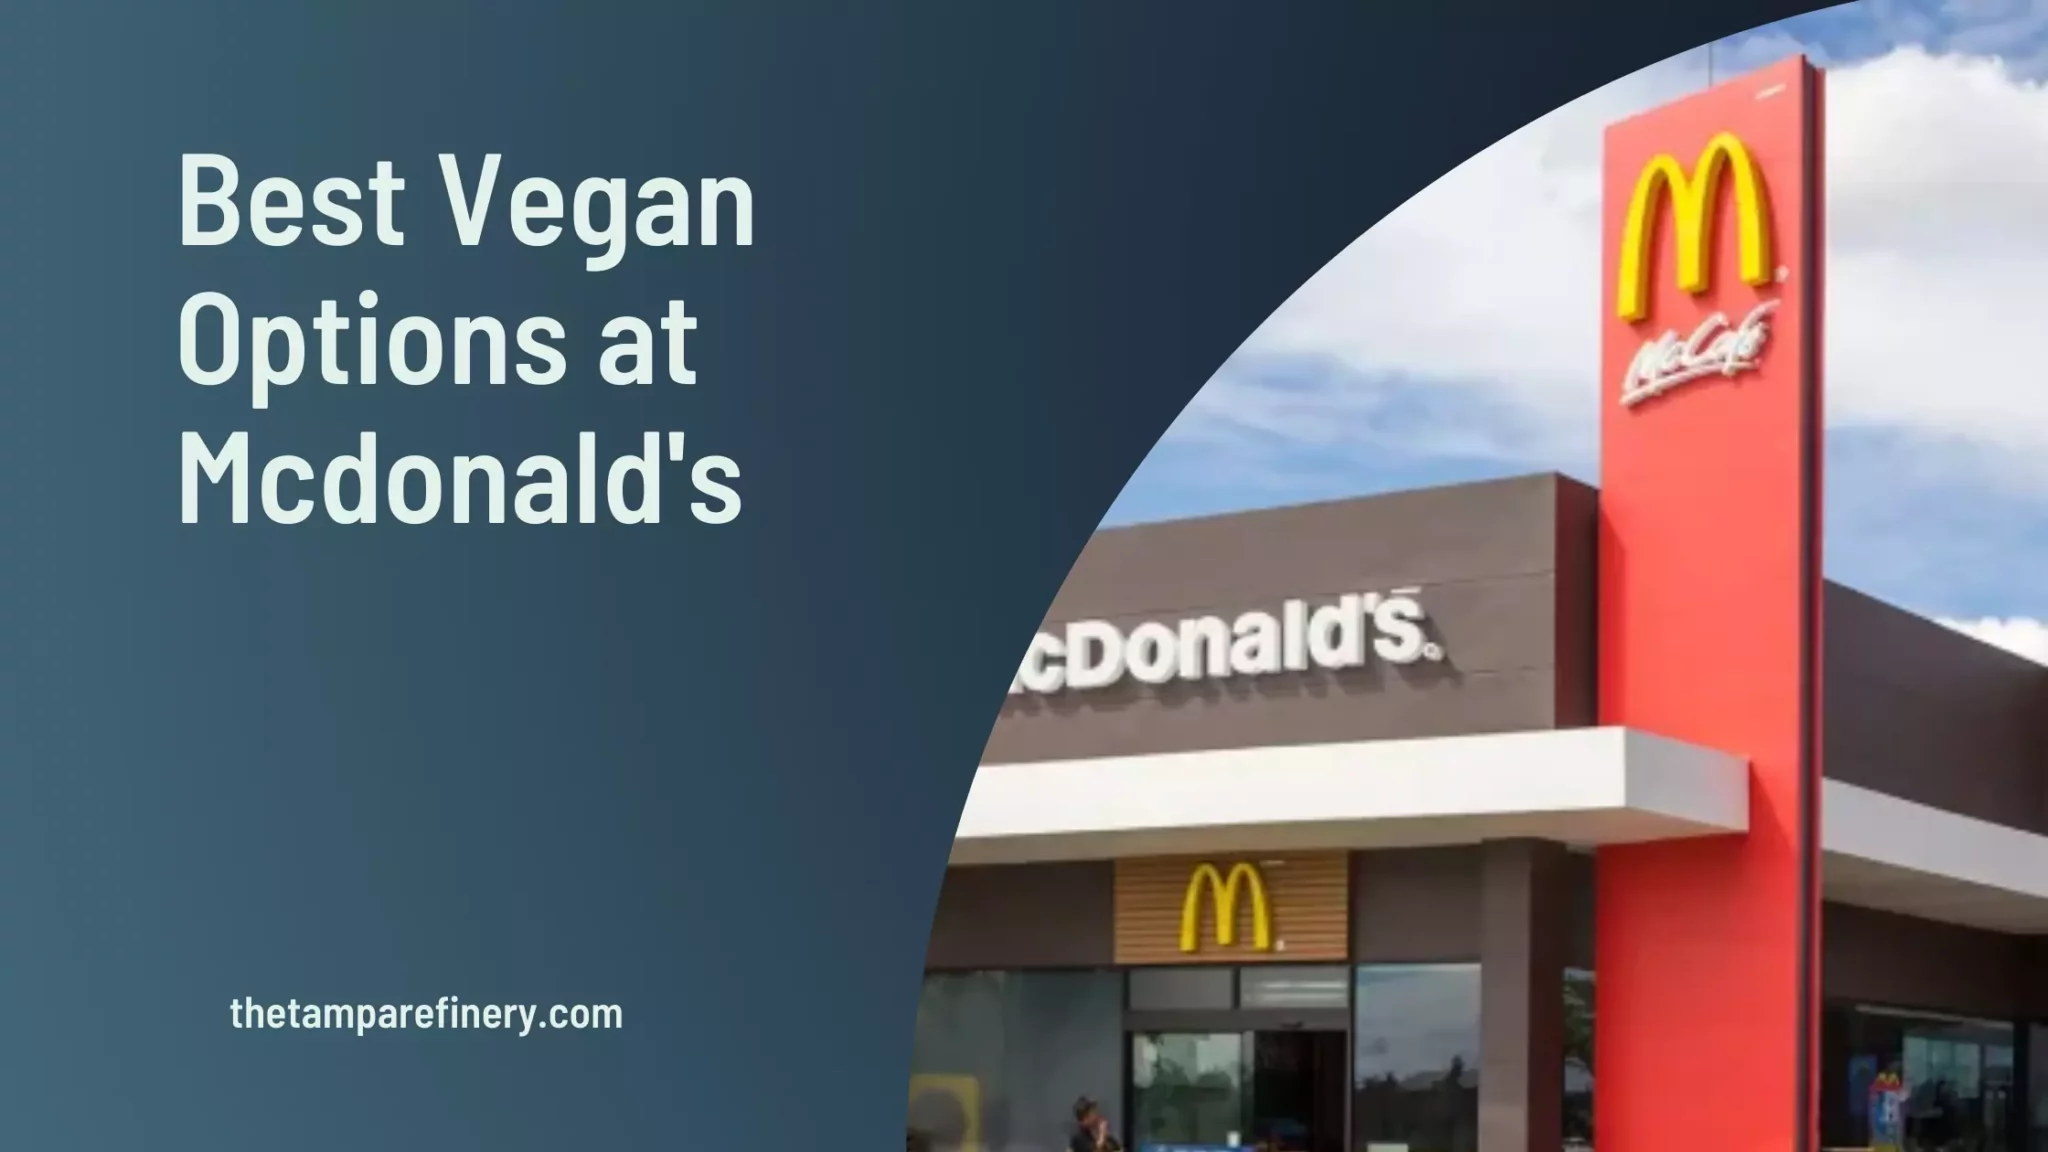 Vegan Options at Mcdonald's